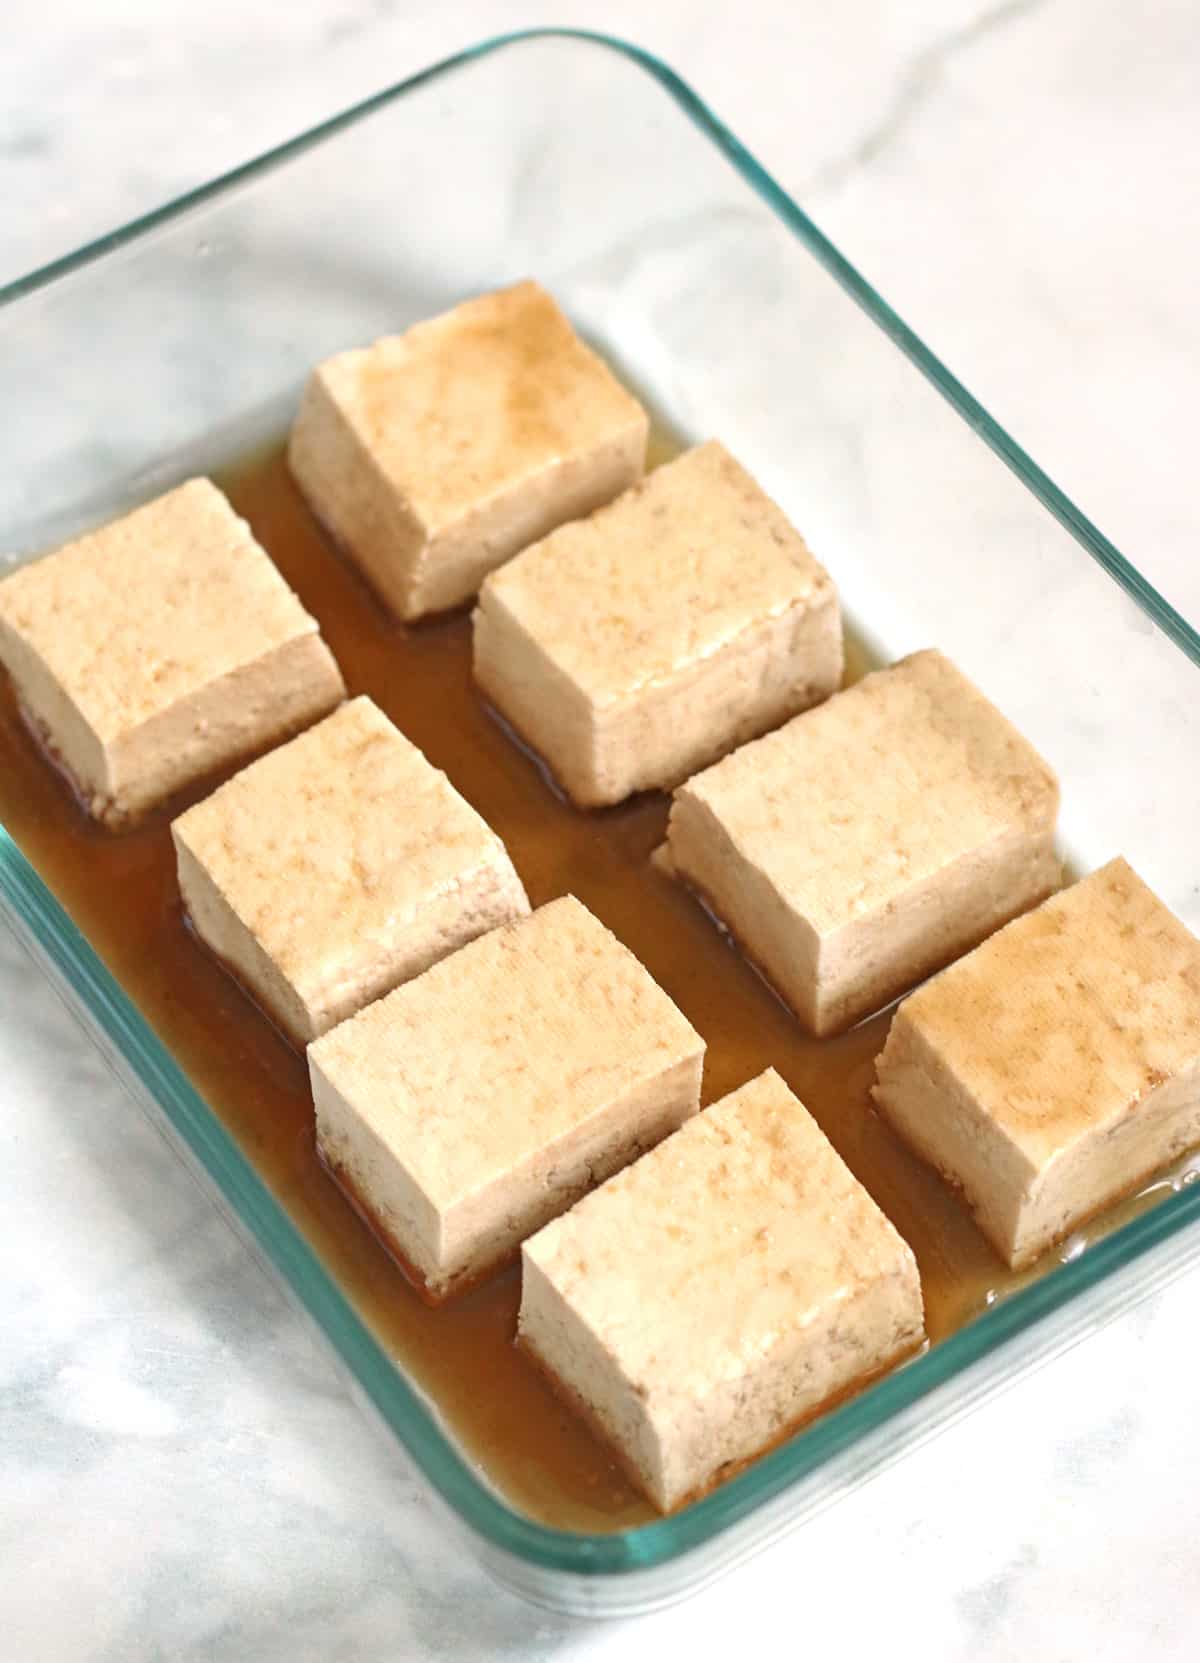 marinating tofu in a glass dish